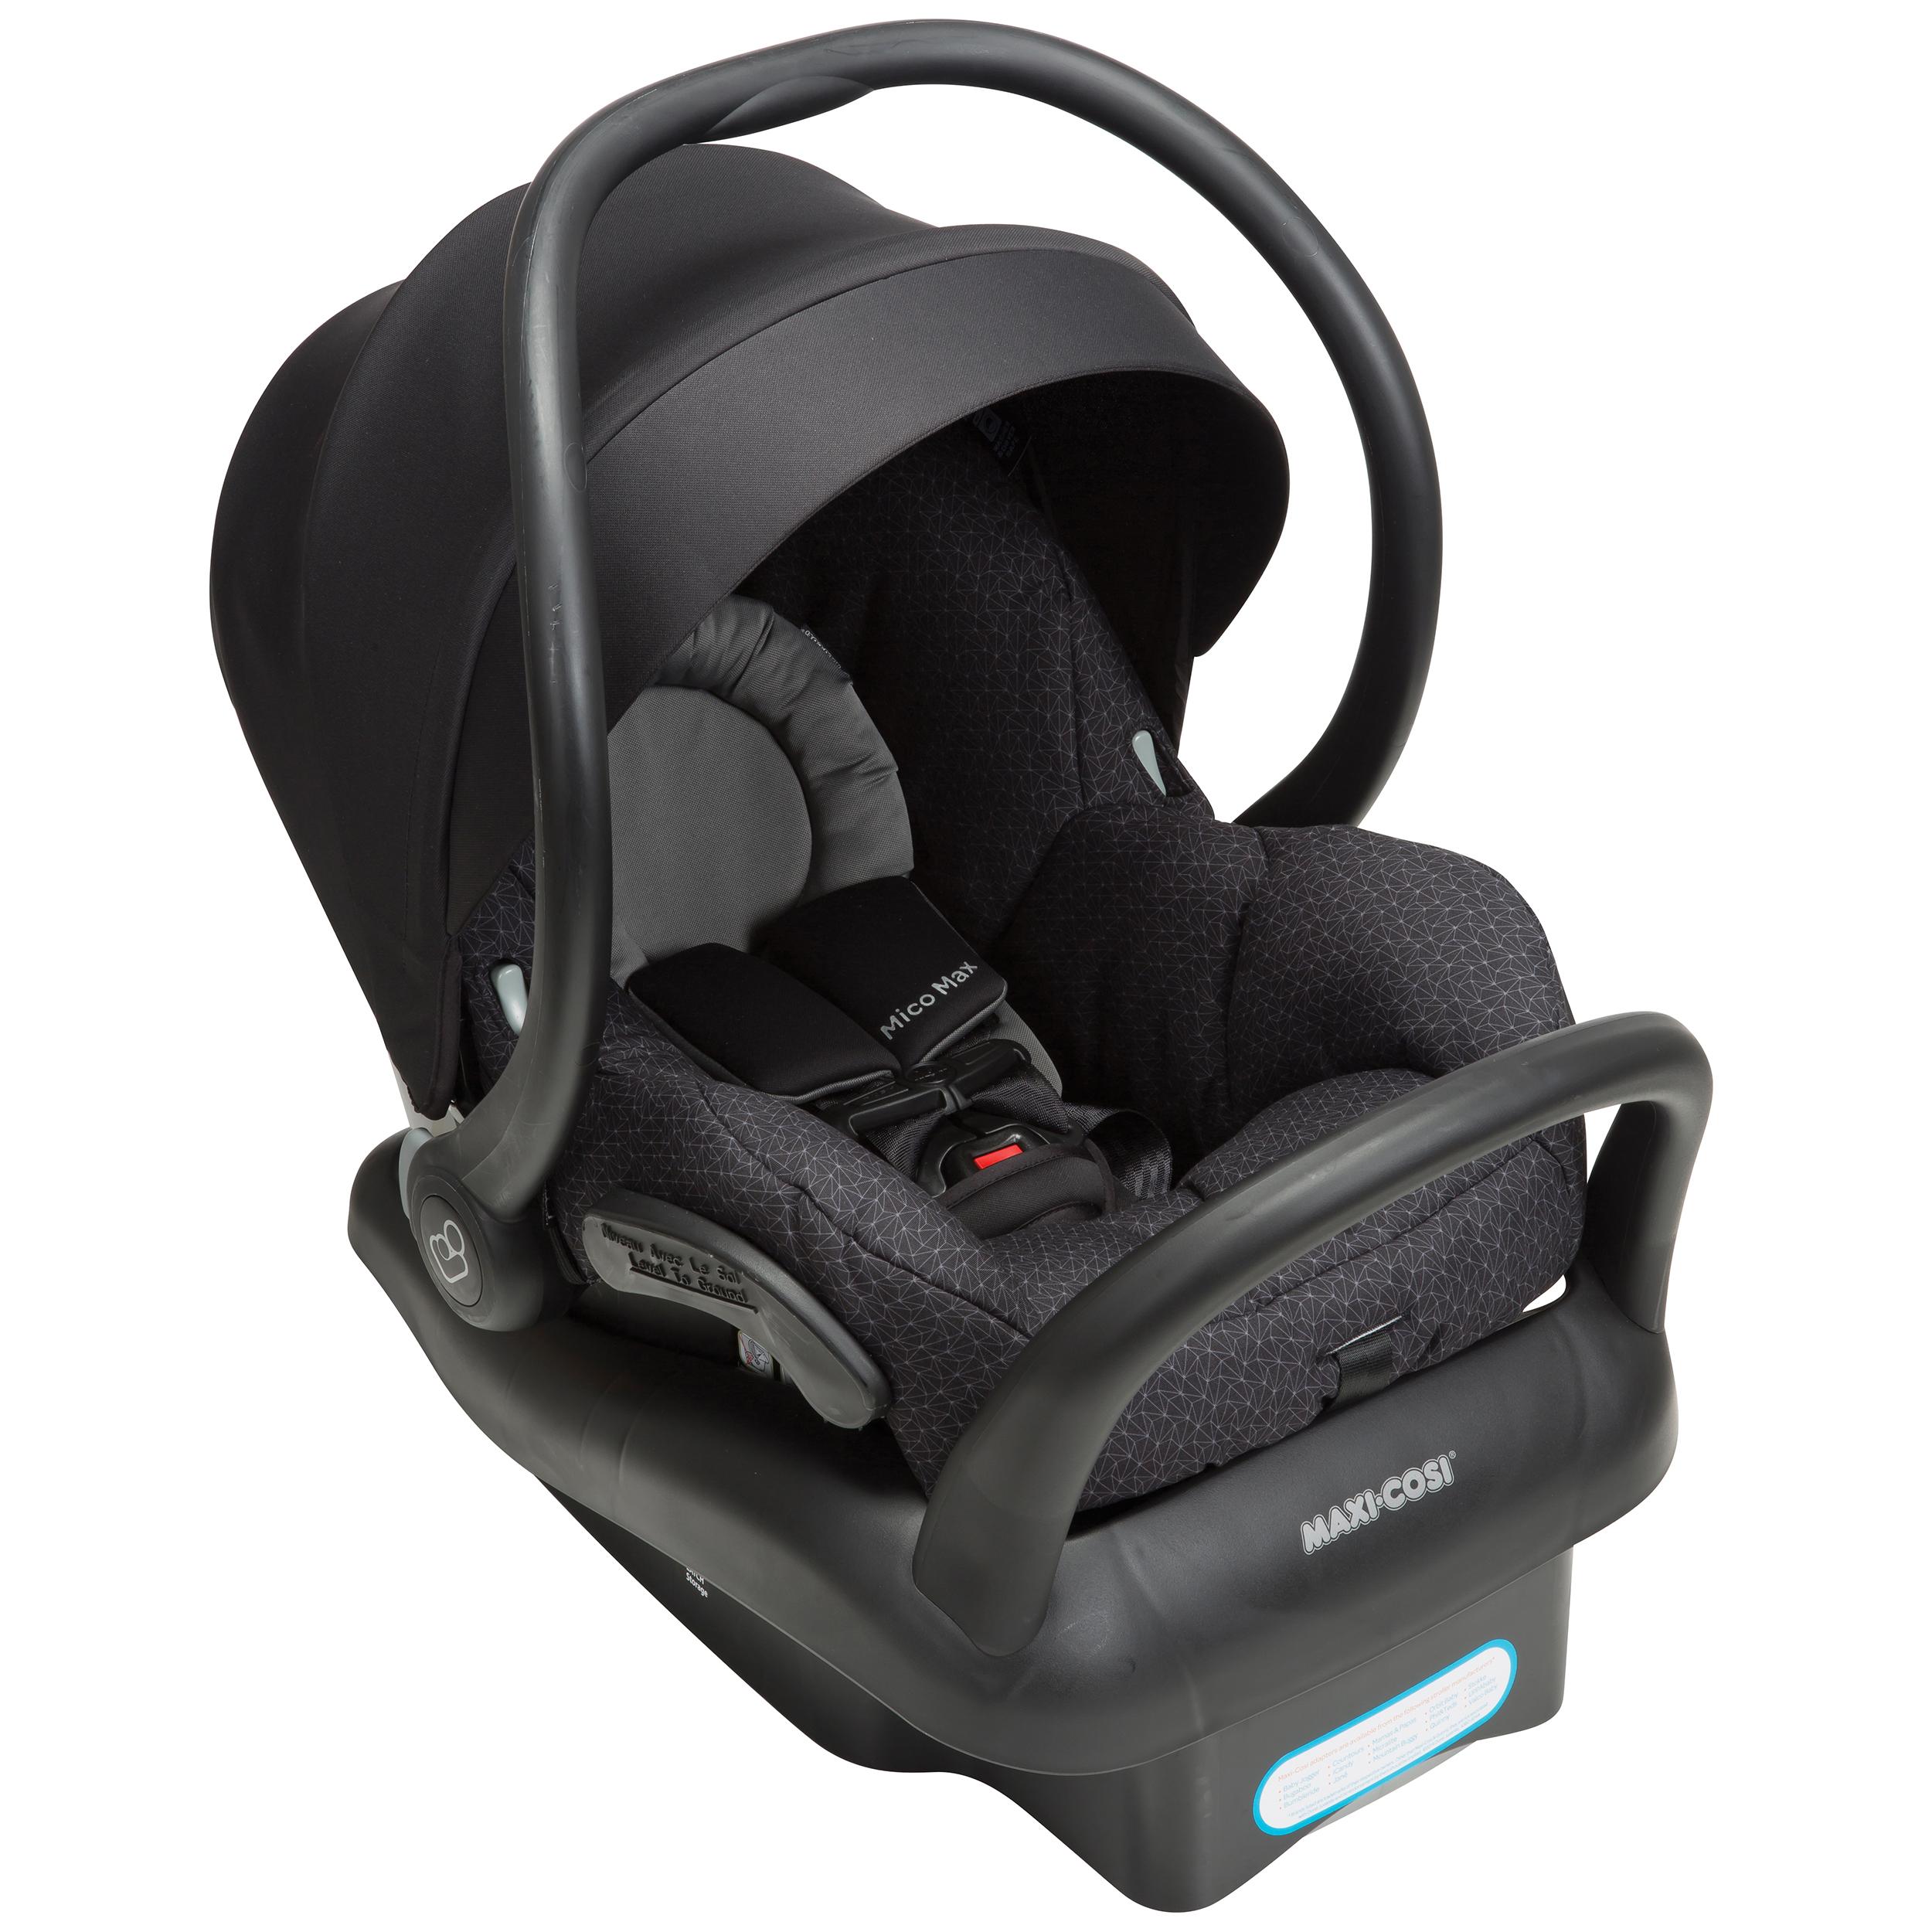 Safest Infant Car Seat 2018